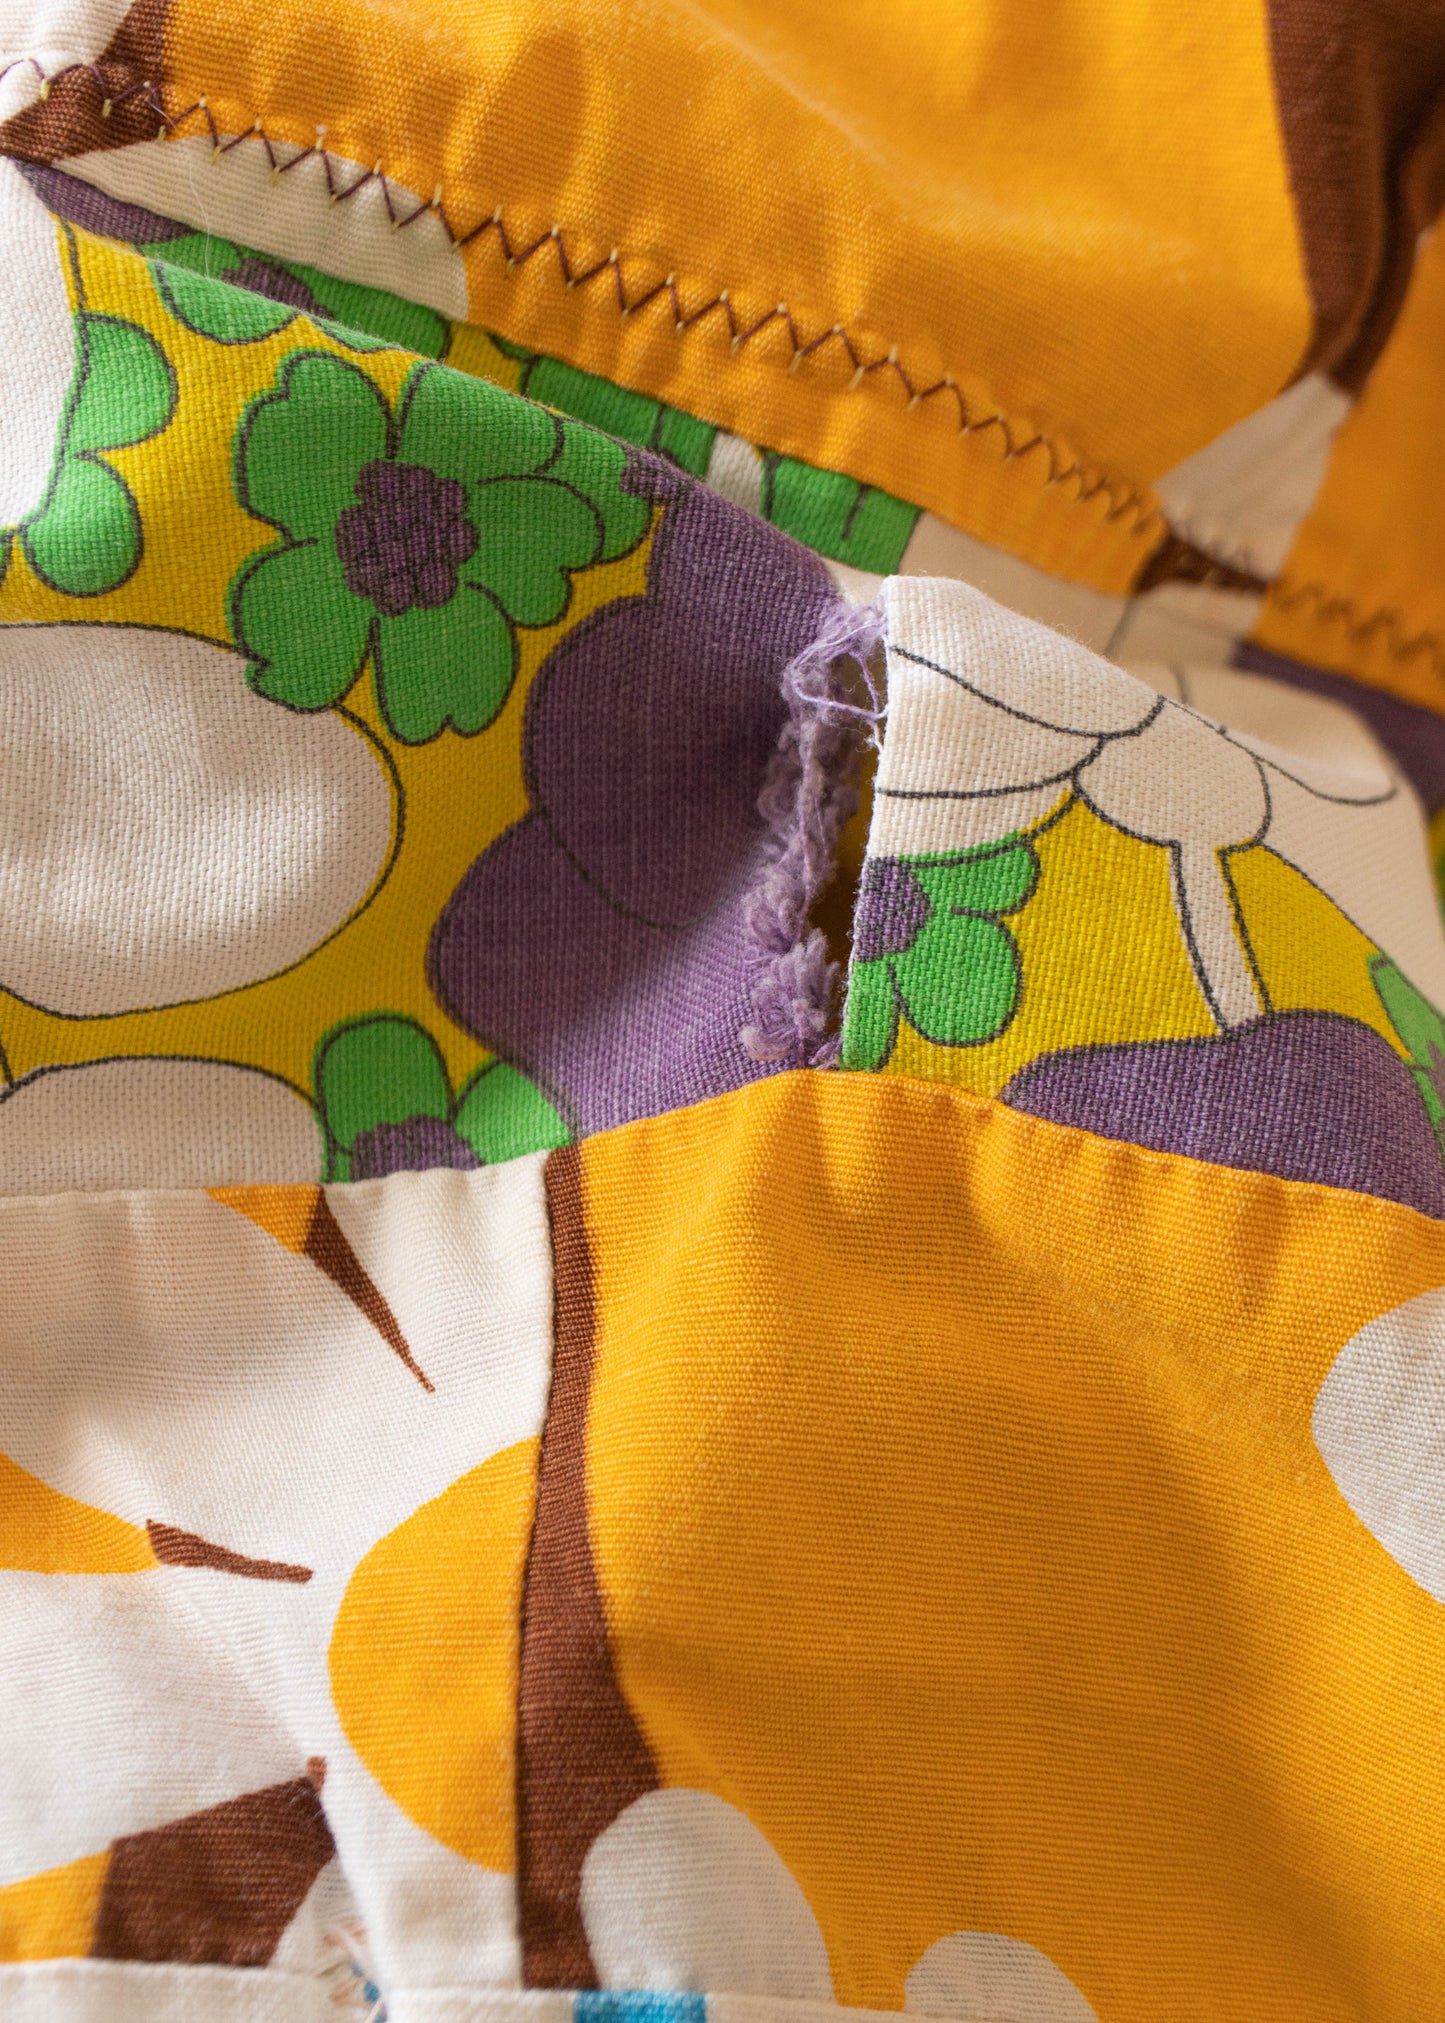 Vintage Floral Pattern Quilt Blanket Twin Size